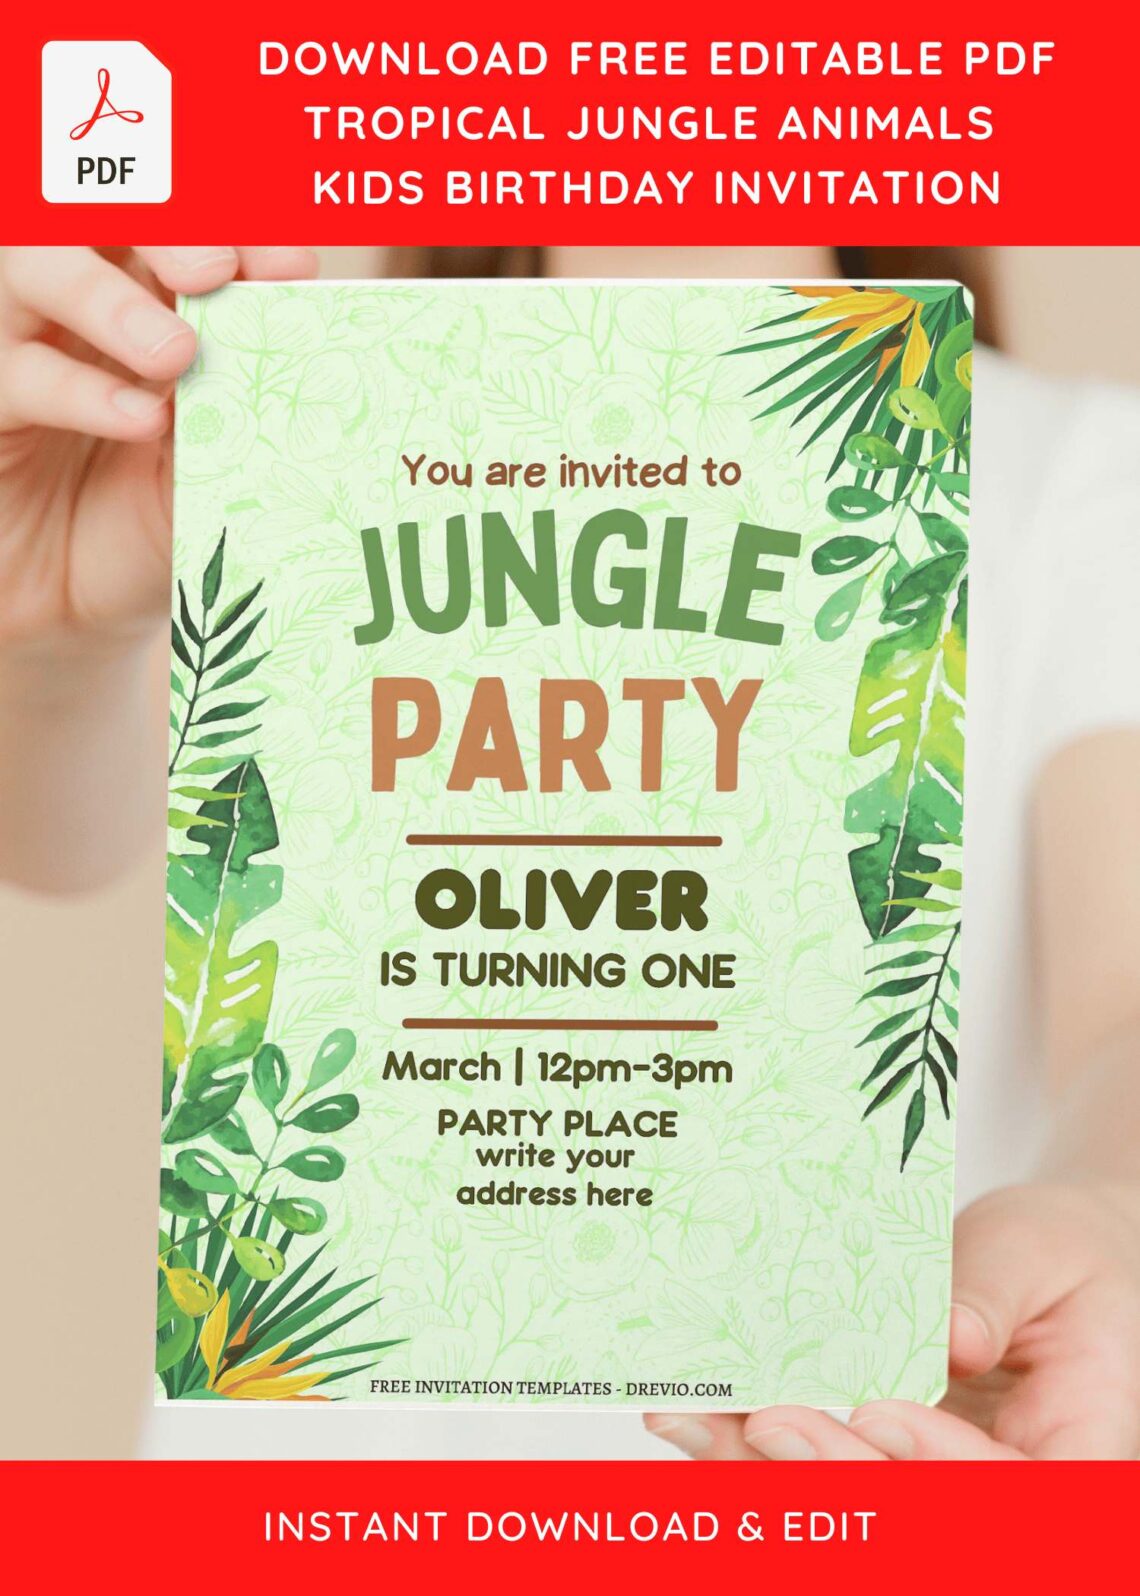 (Free Editable PDF) Bright Safari Jungle Birthday Invitation Templates with editable text